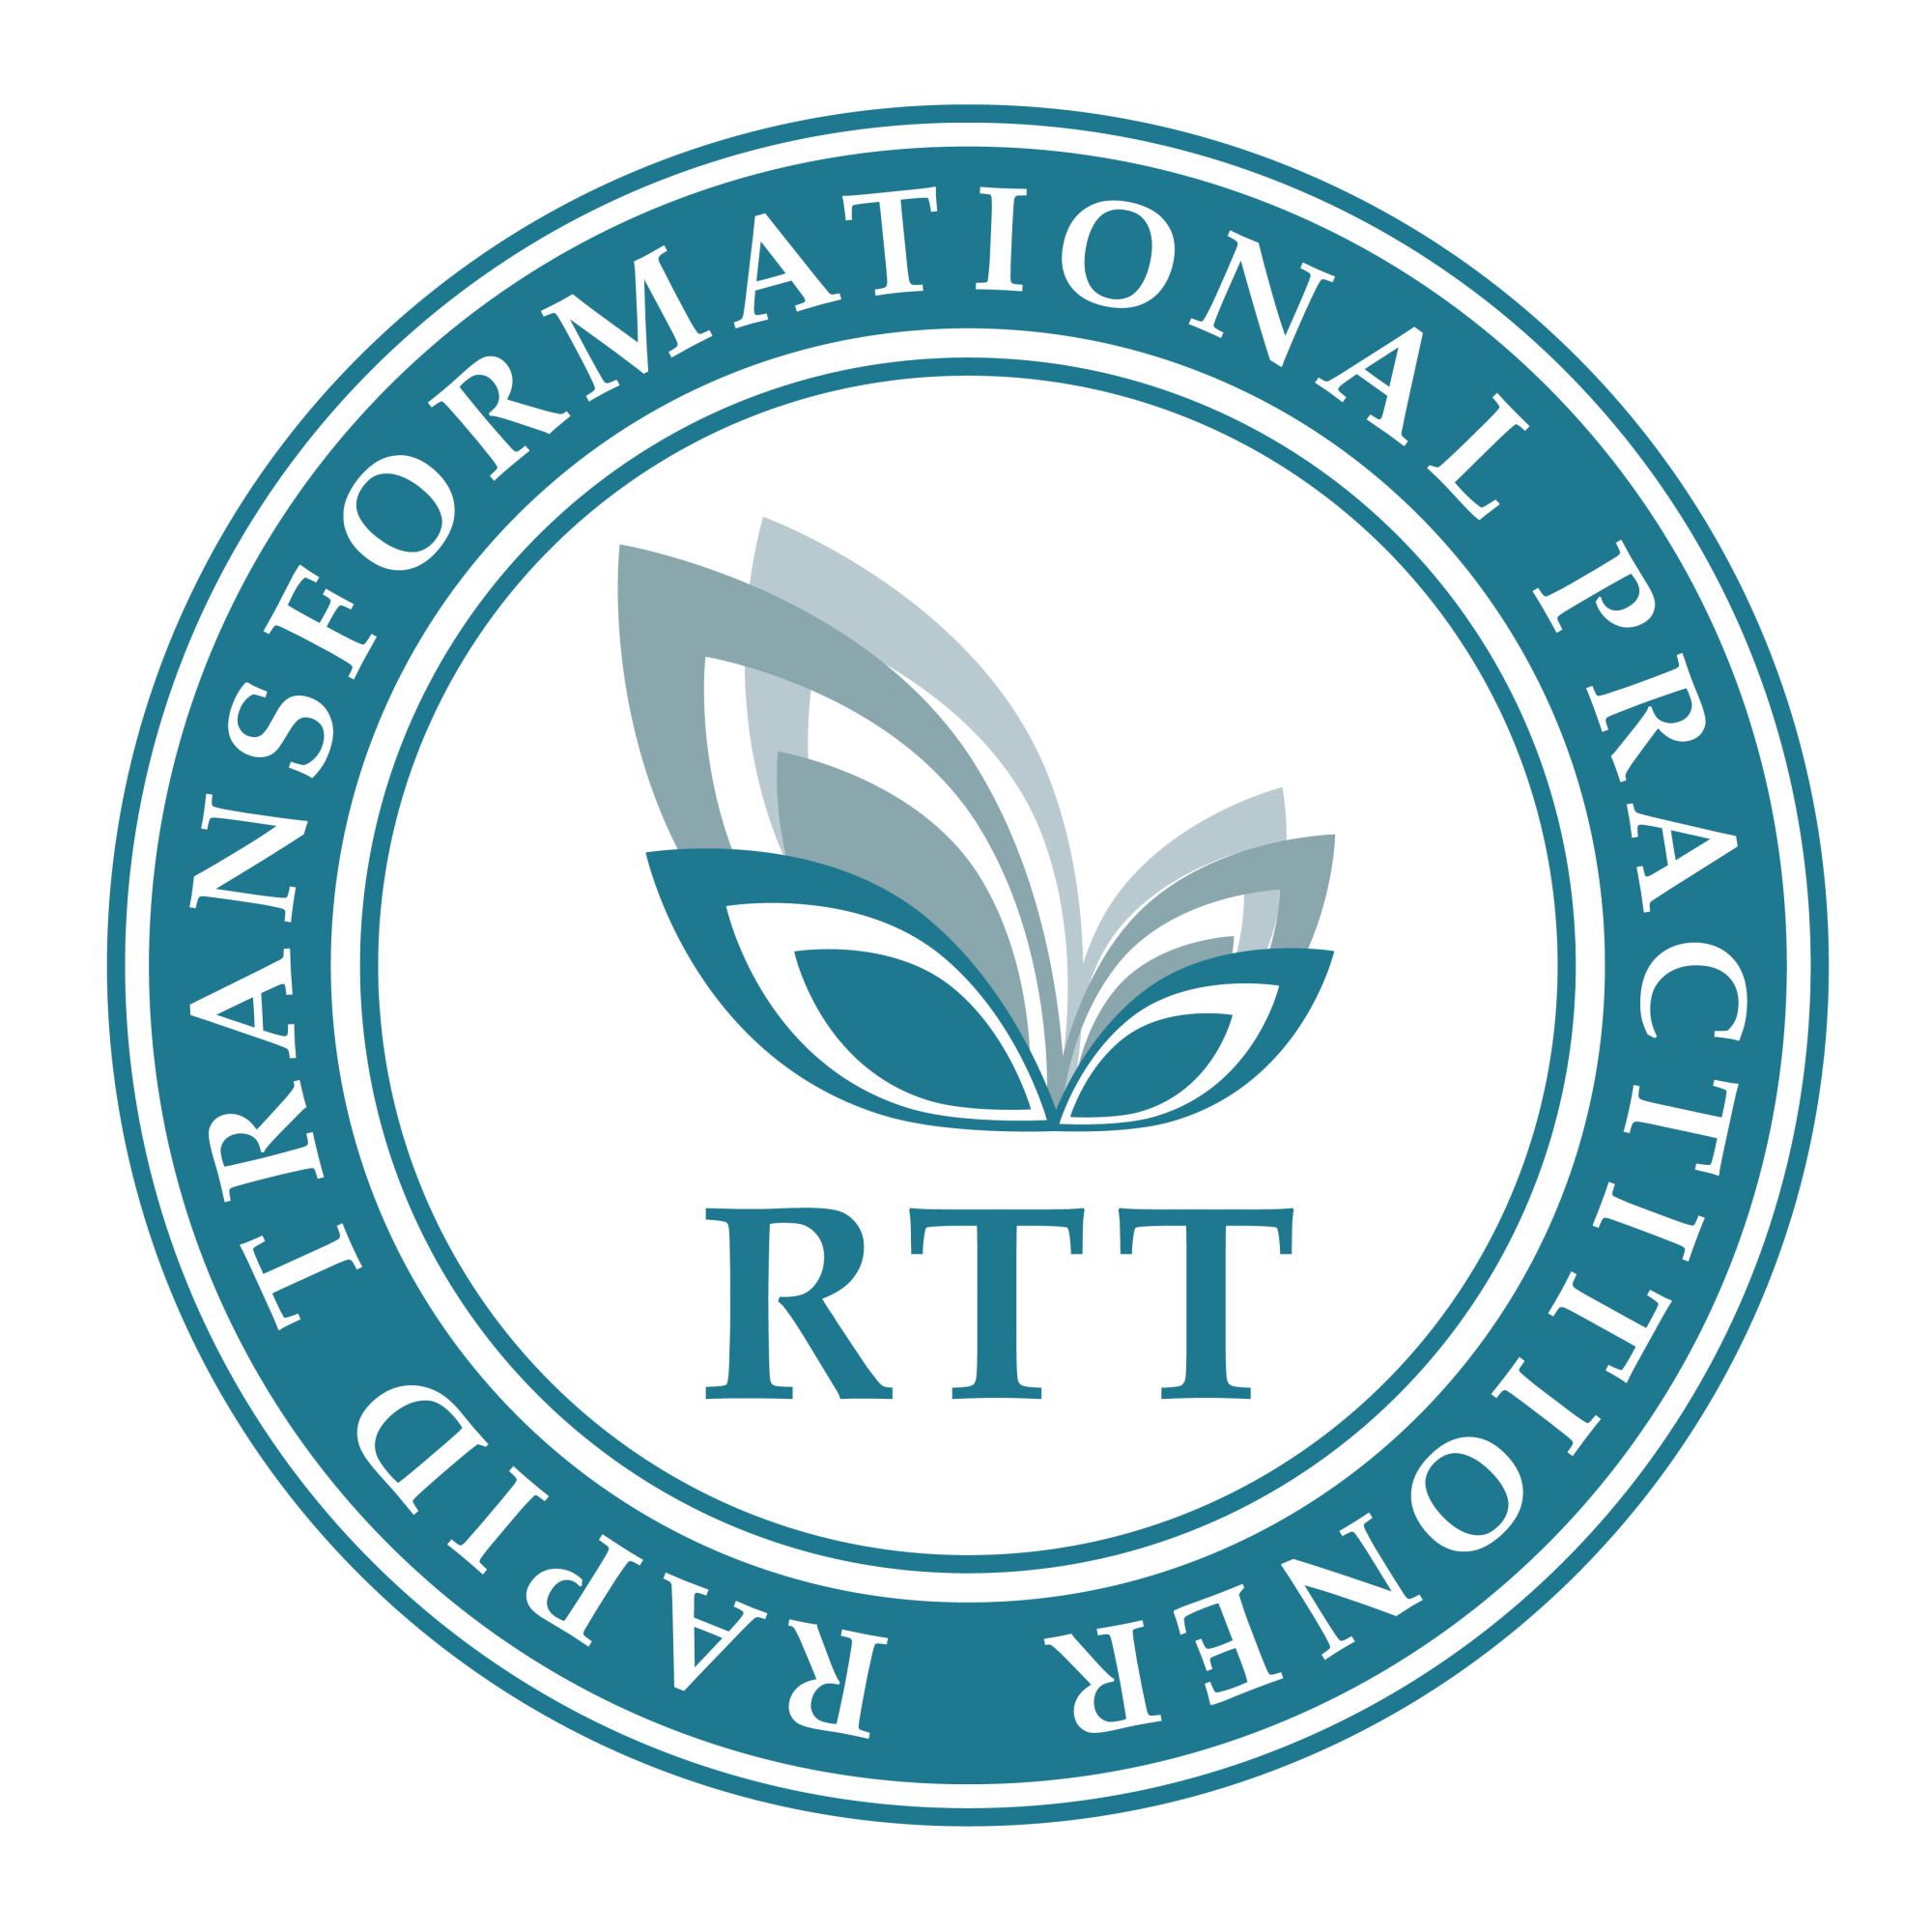 Rtt+logo+2